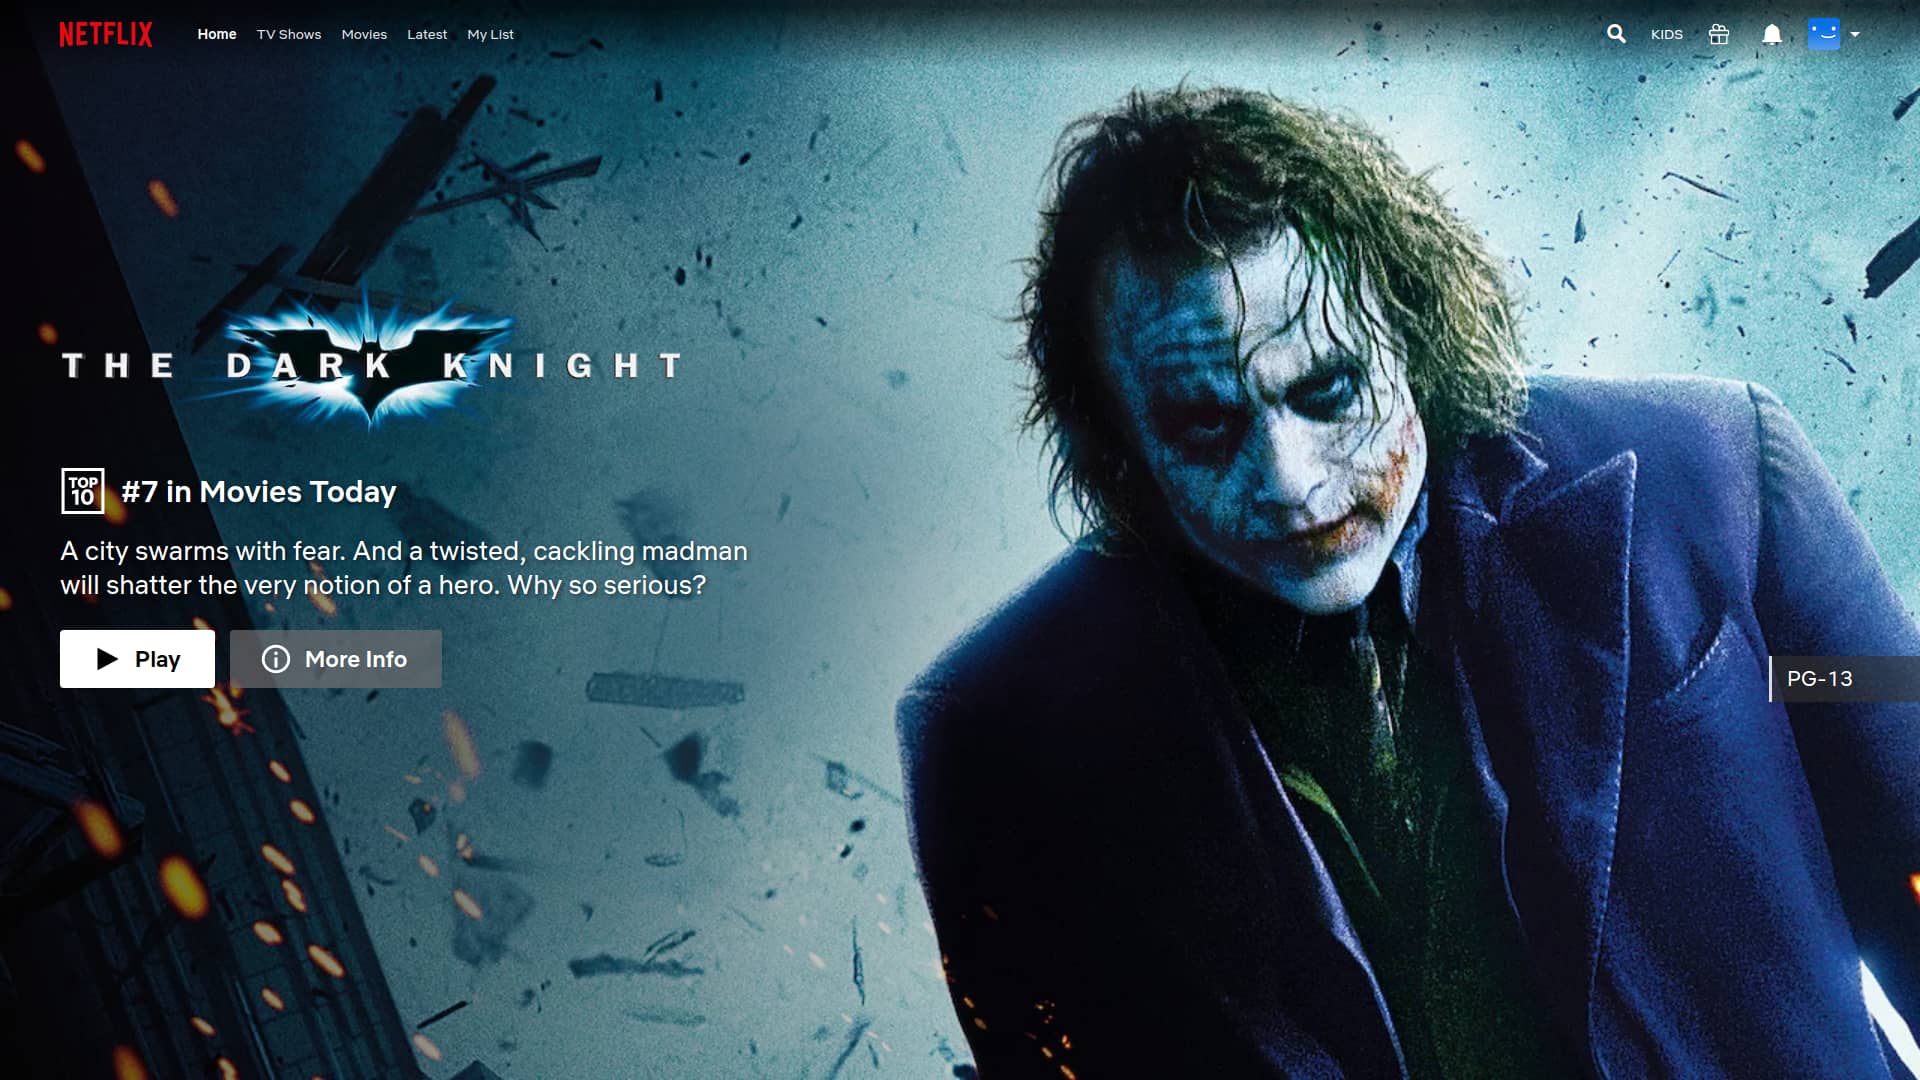 The Dark Knight returns to Netflix